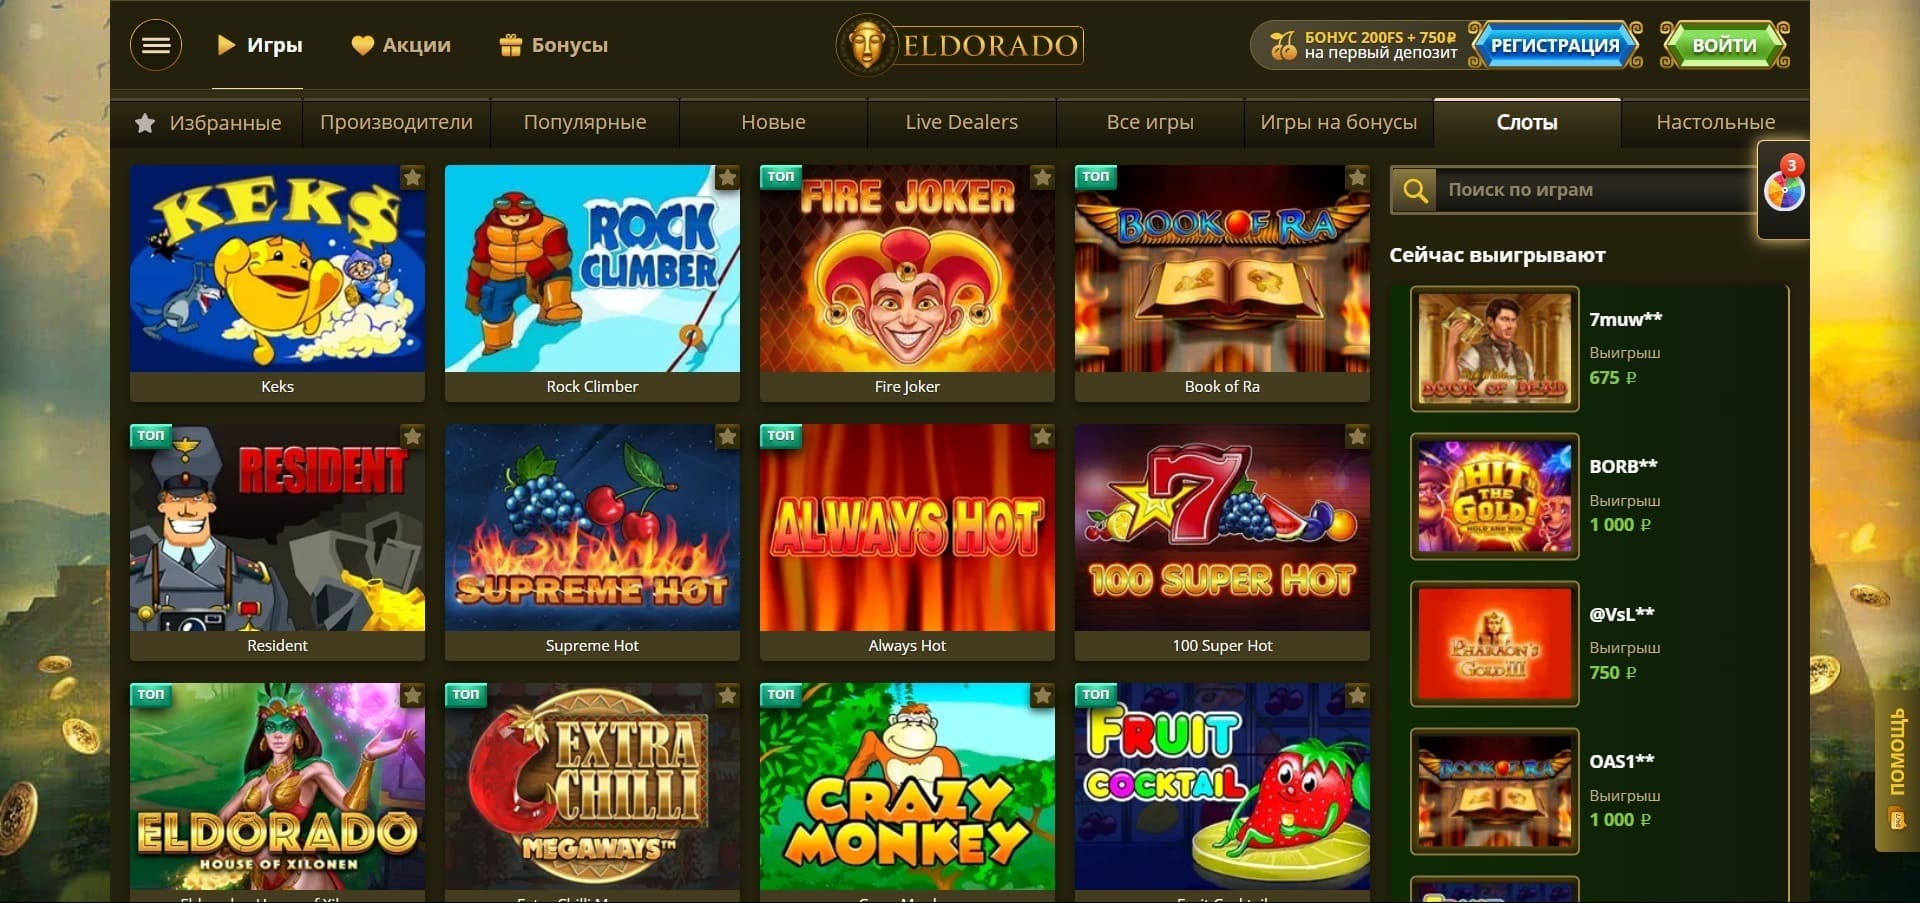 Eldorado slot machines